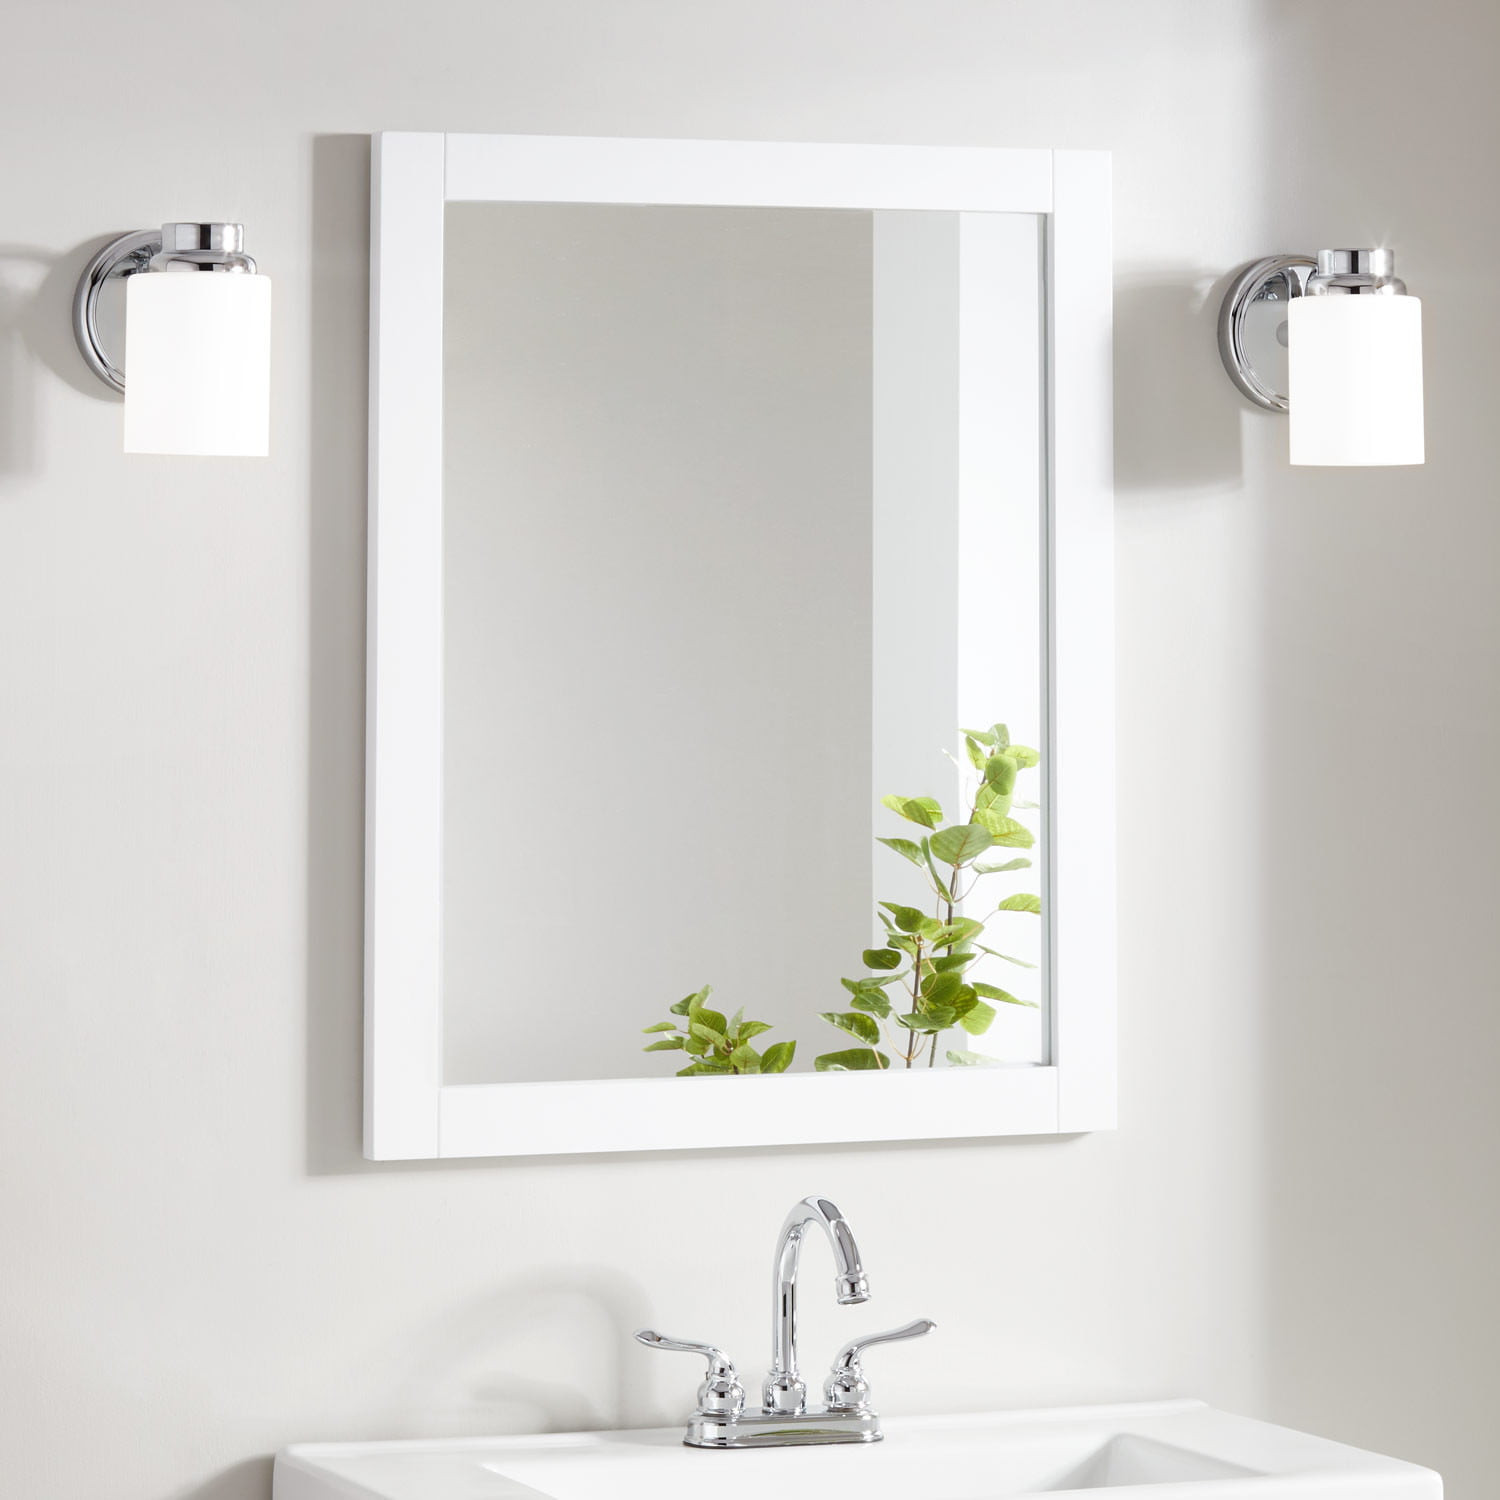 White Bathroom Mirror
 Lander Vanity Mirror White Bathroom